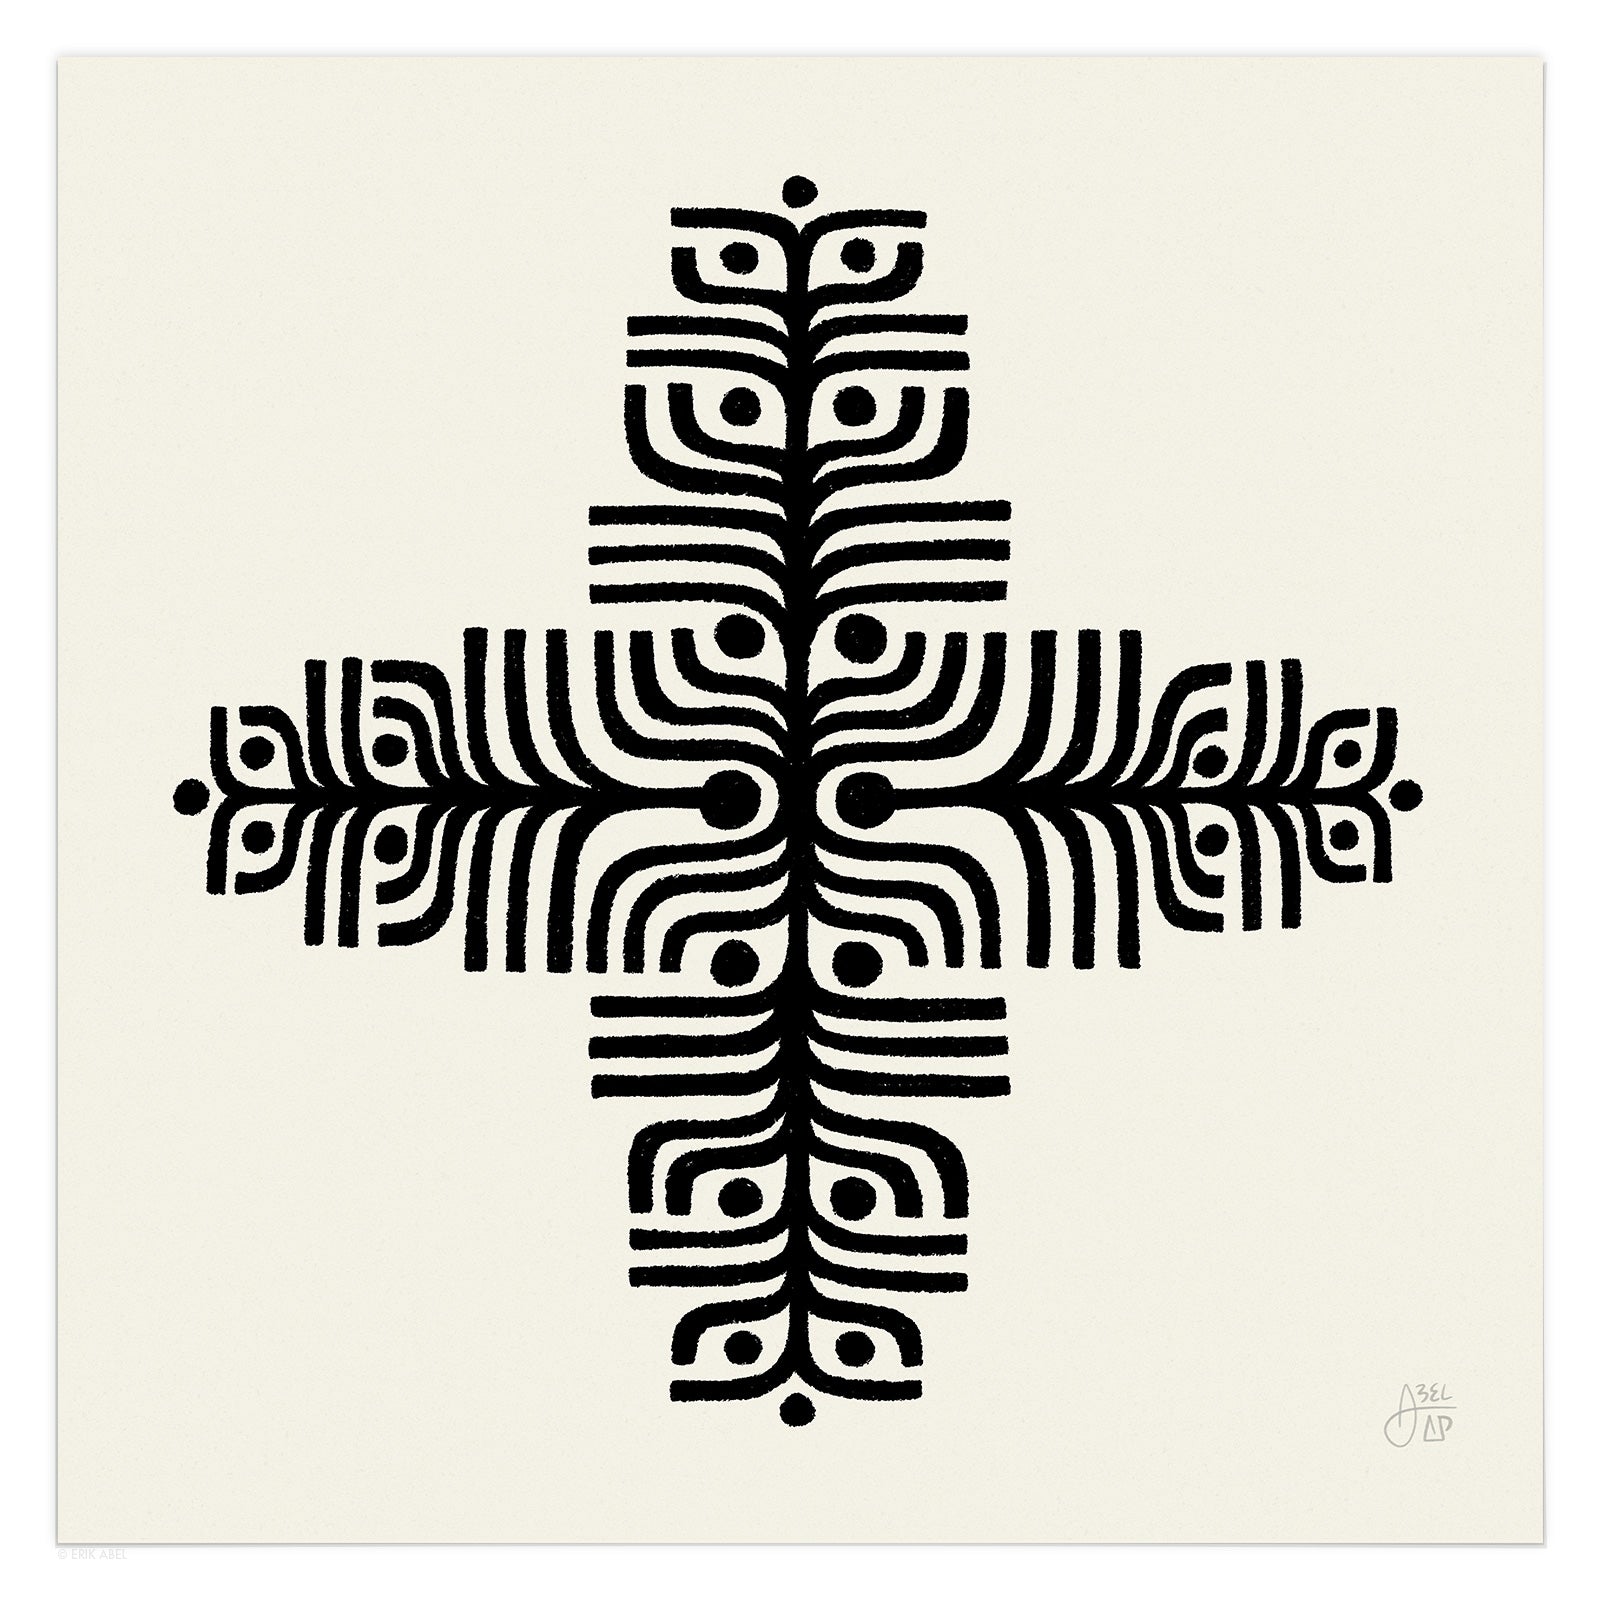 Black and white primitive mandala art design print by Erik Abel